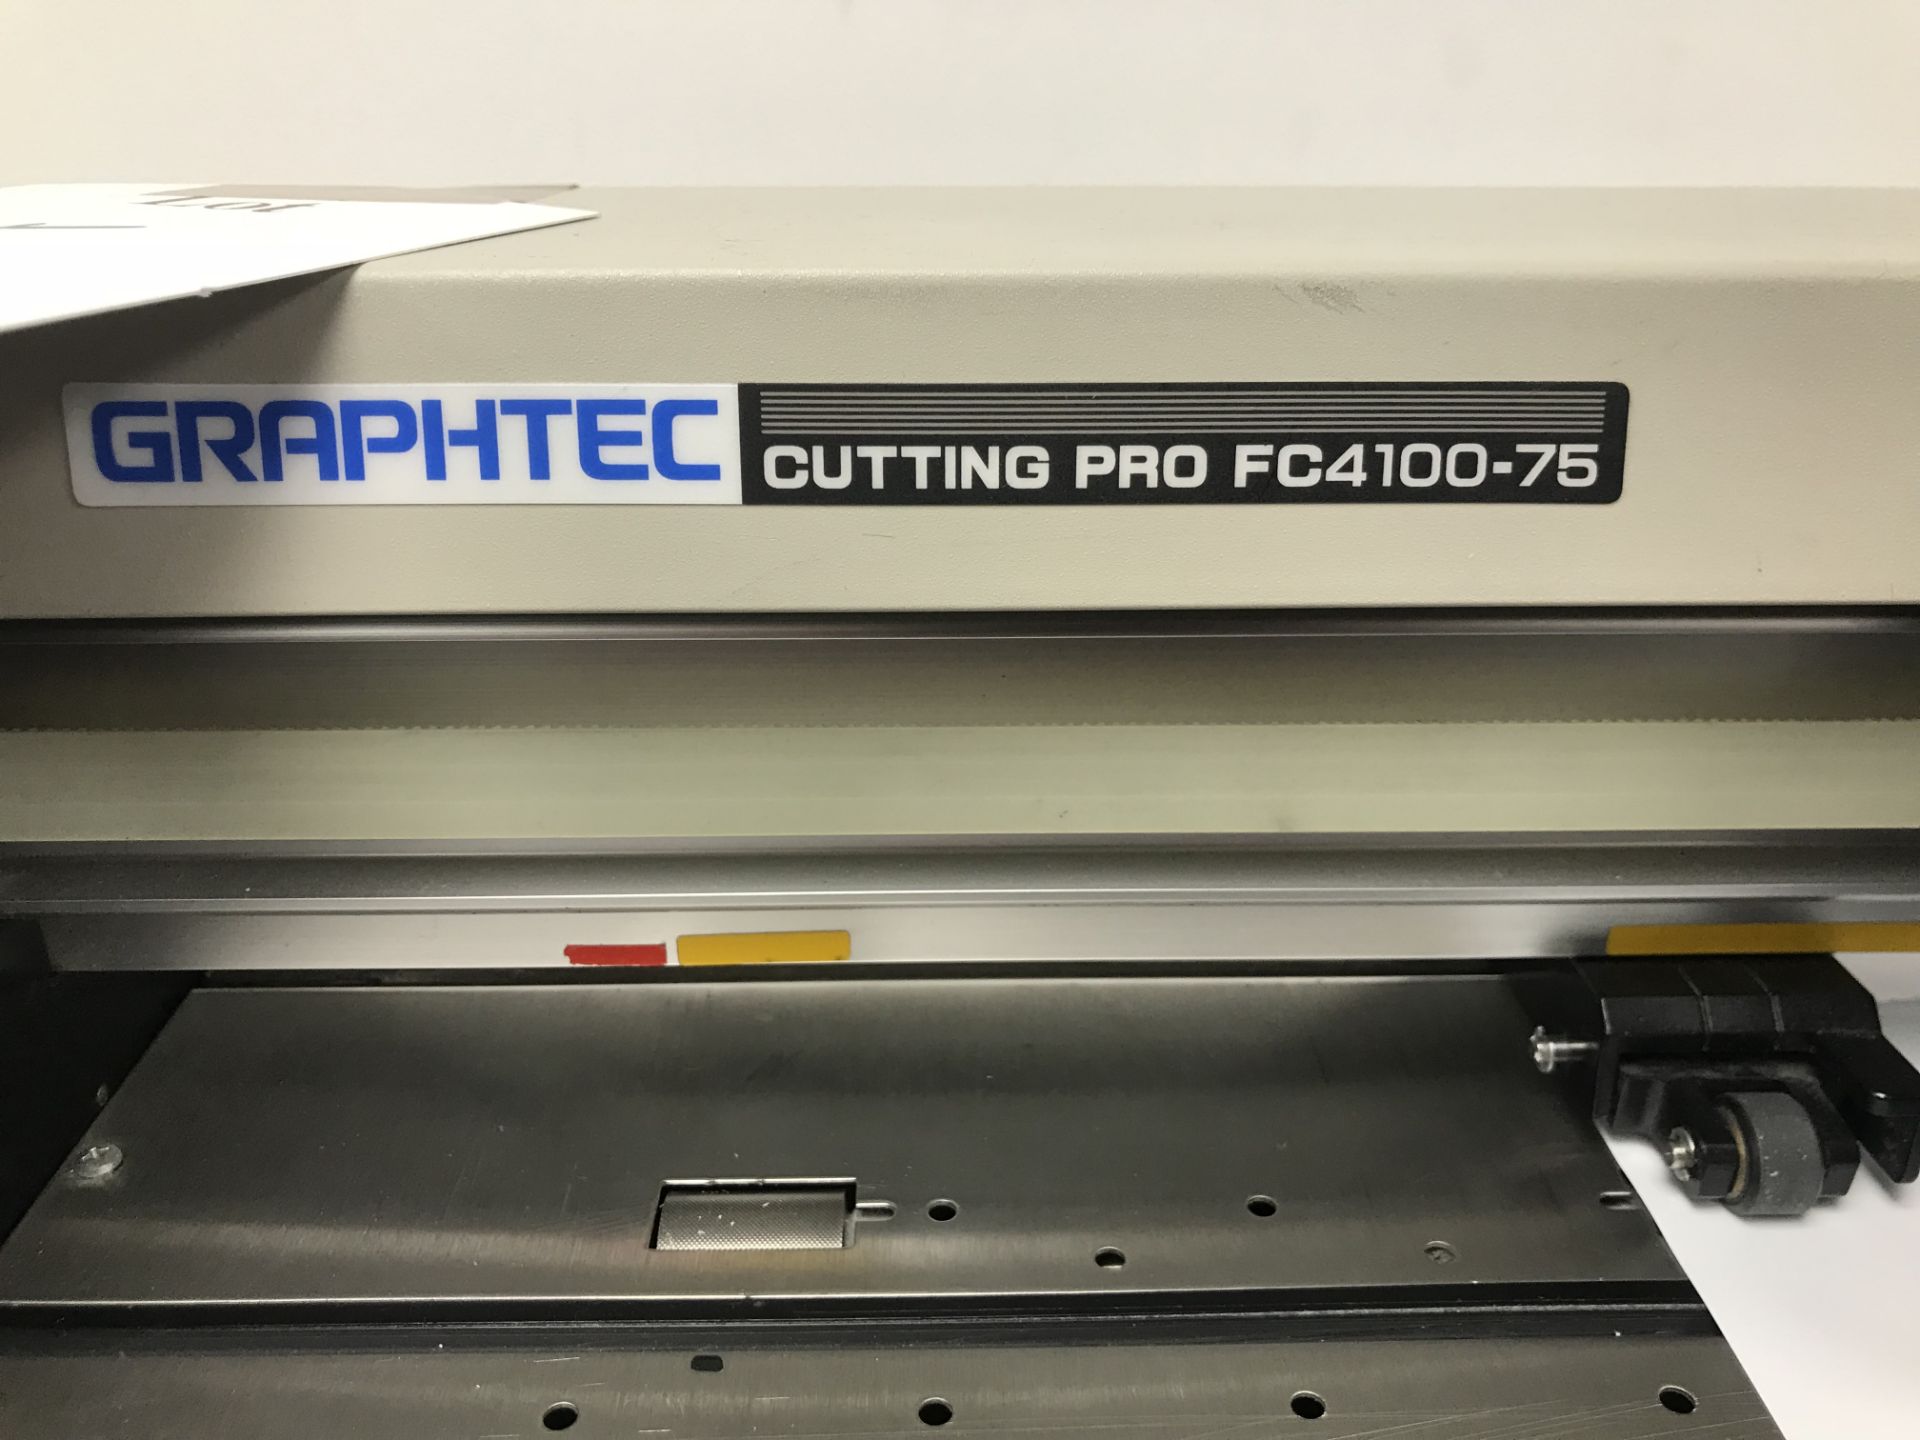 Graphtec FC4100-75 Cutting Pro Vinyl Cutter w/ CD User Manual - Image 3 of 6